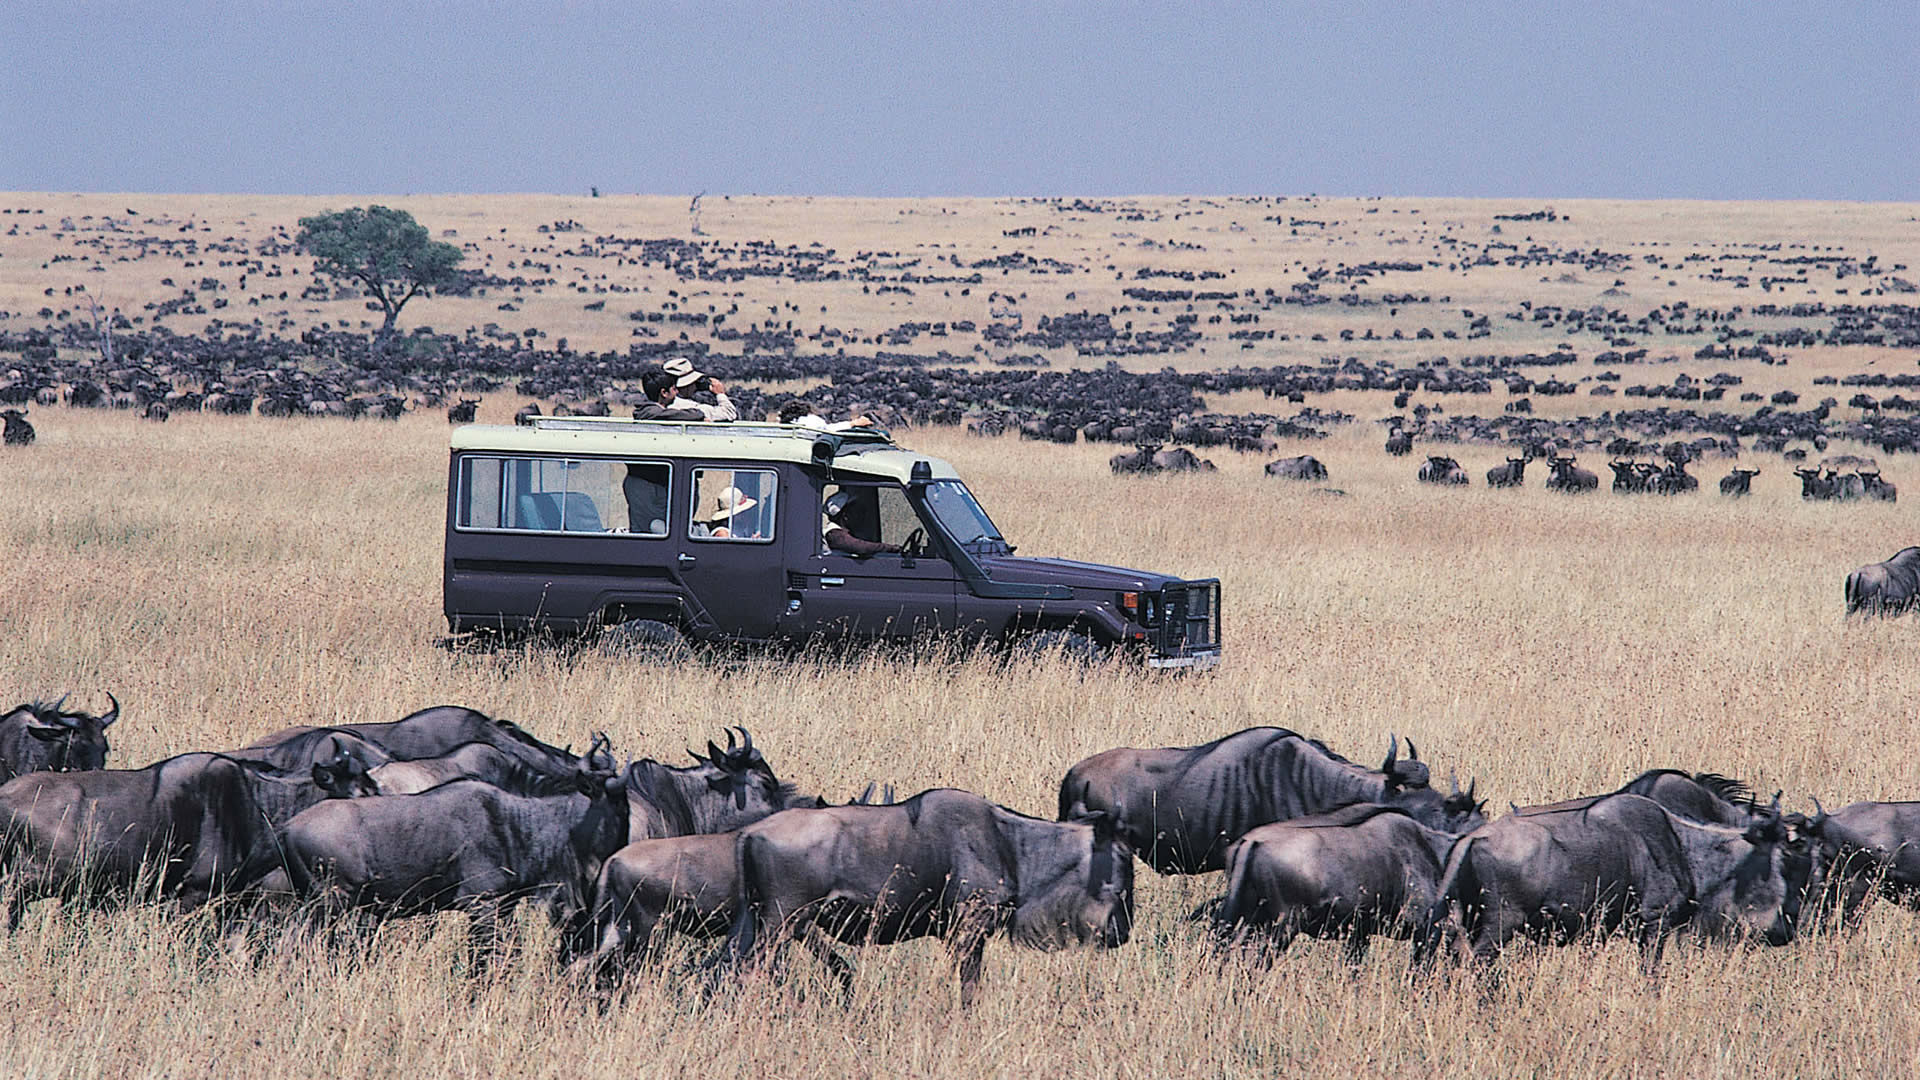 Maasai mara national reserve